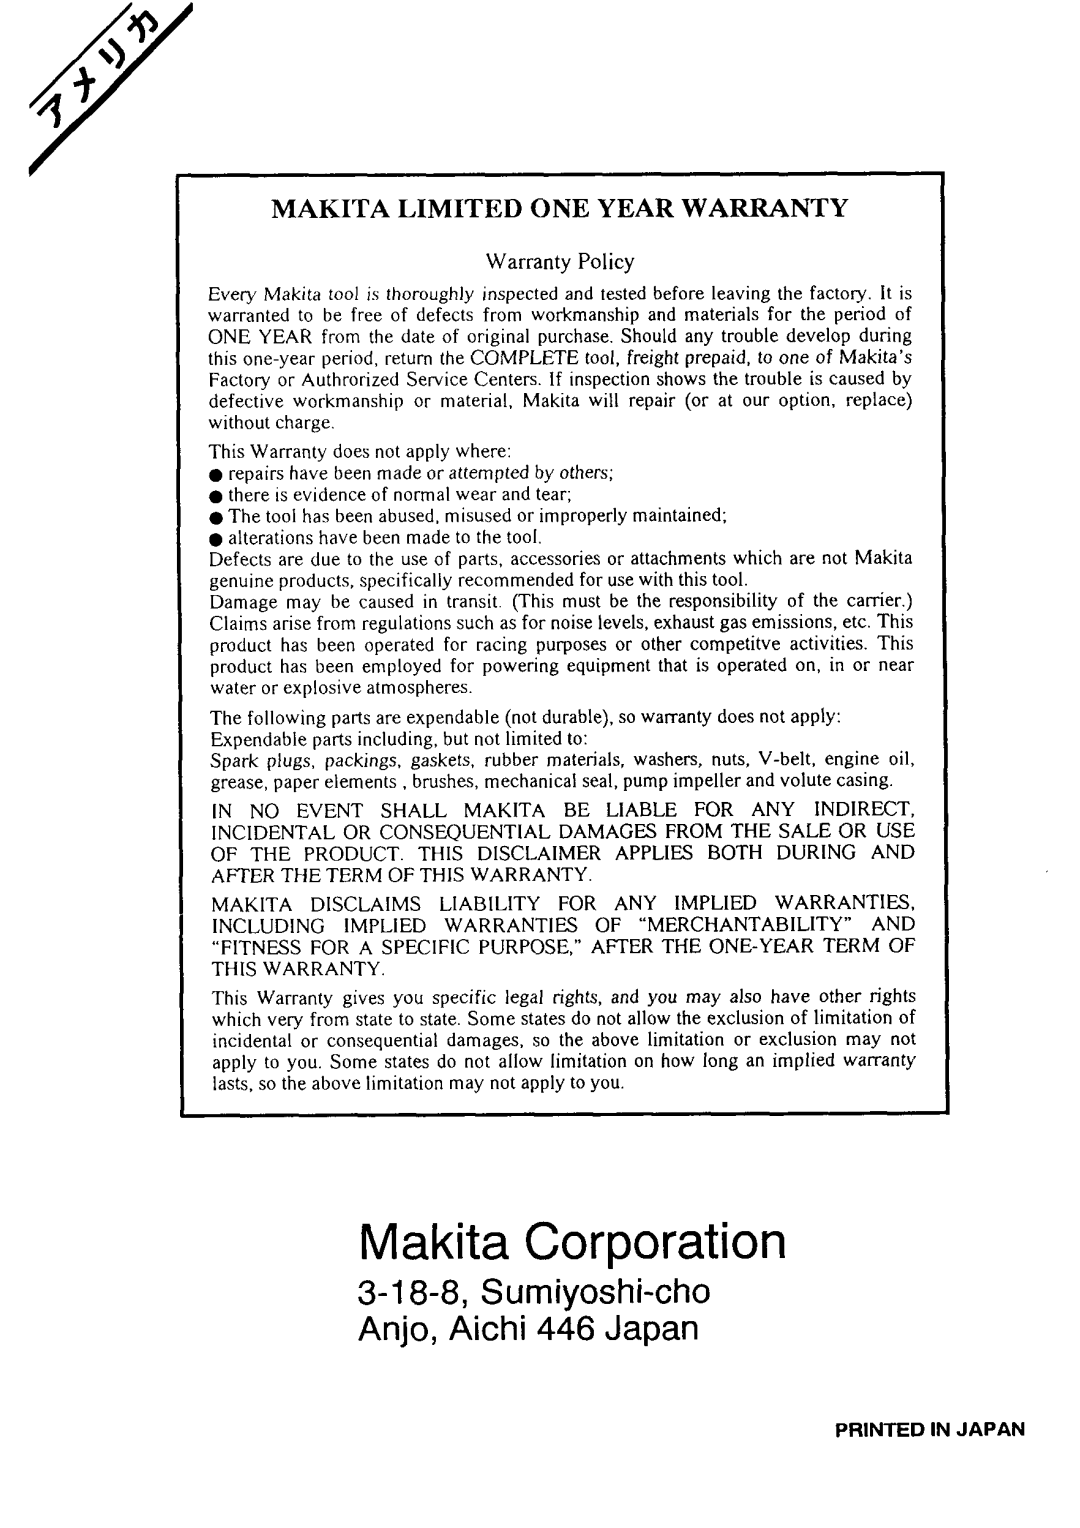 Makita EW1OOR Makita Limited One Year Warranty, Makita Corporation, 3-18-8, Sumiyoshi-choAnjo, Aichi 446 Japan 